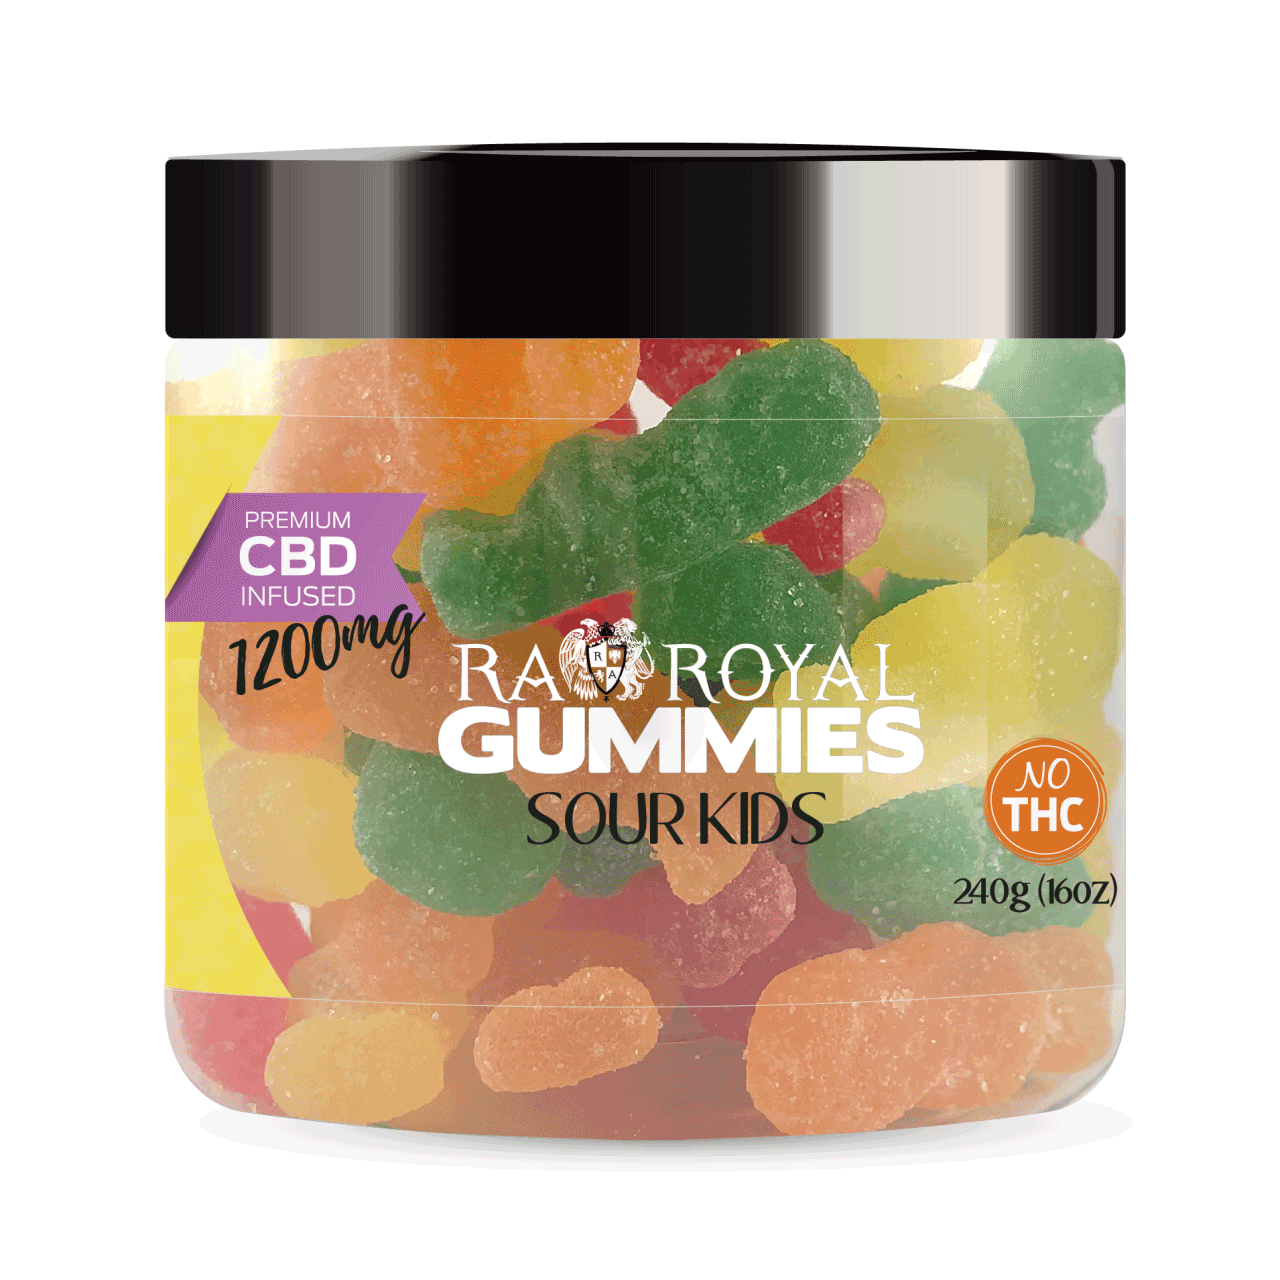 R.A. Royal Gummies 1200MG CBD Infused Sour Kids 63055.1571684391